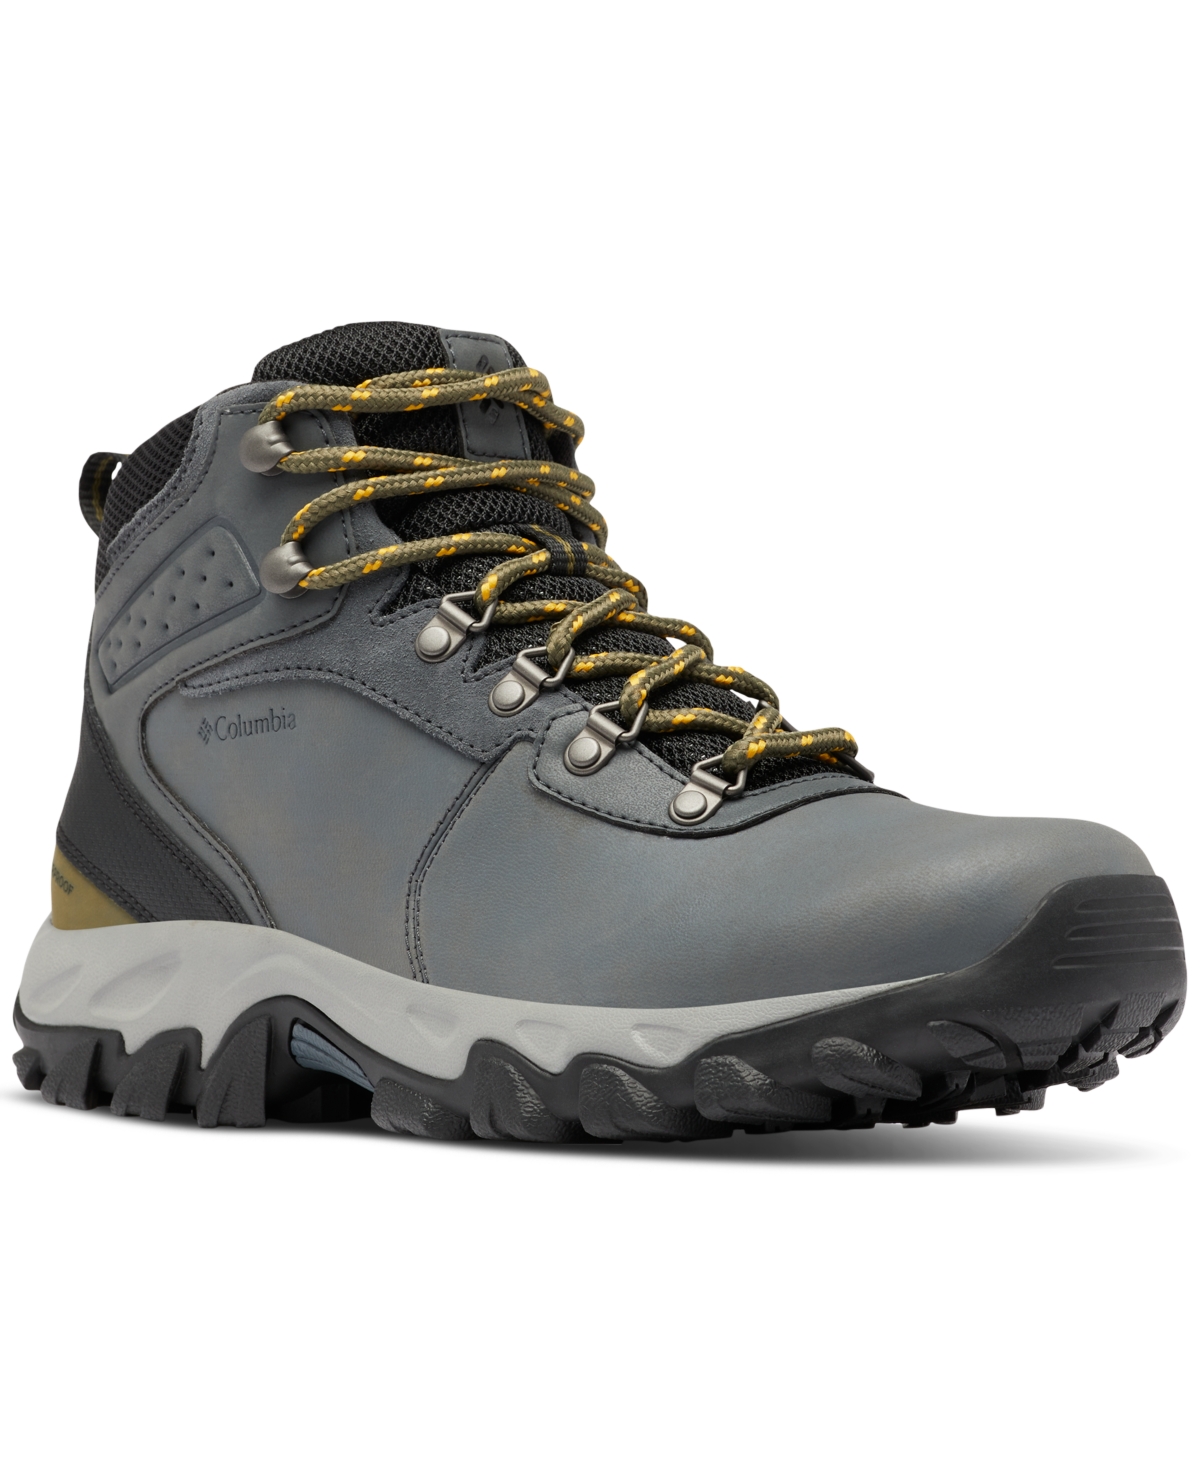 Men's Newton Ridge Plus Ii Waterproof Hiking Boots - Cordovan, Squash